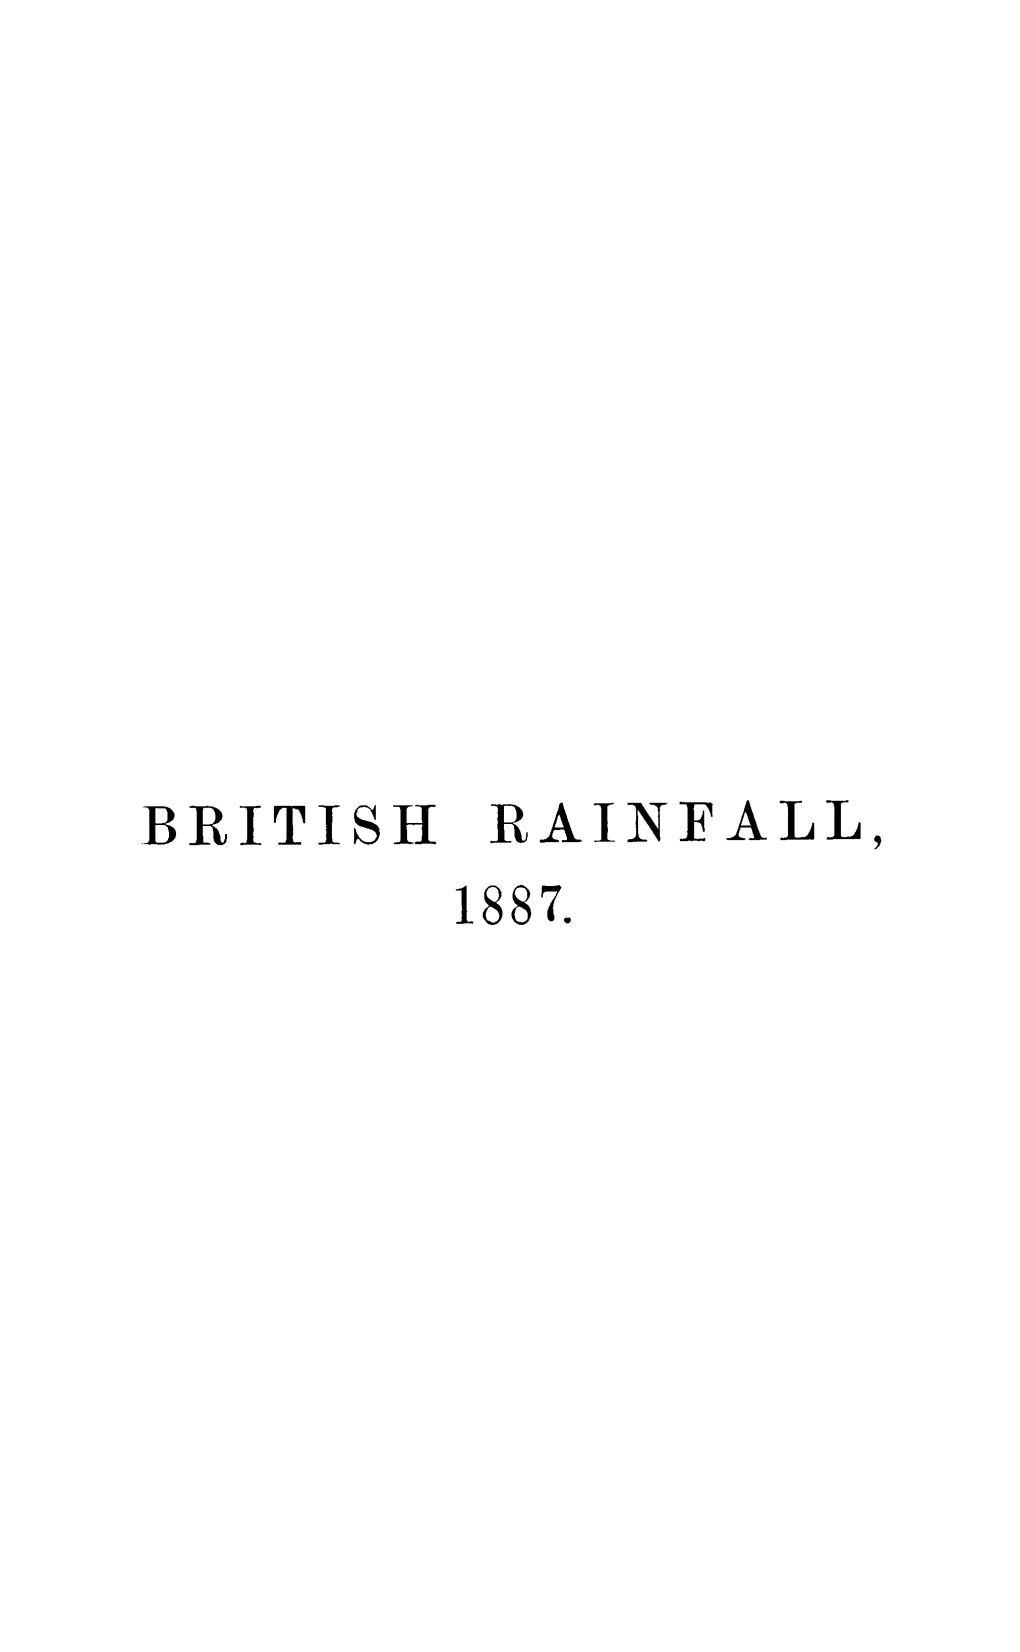 British Rainfall, 1887. London : S.W